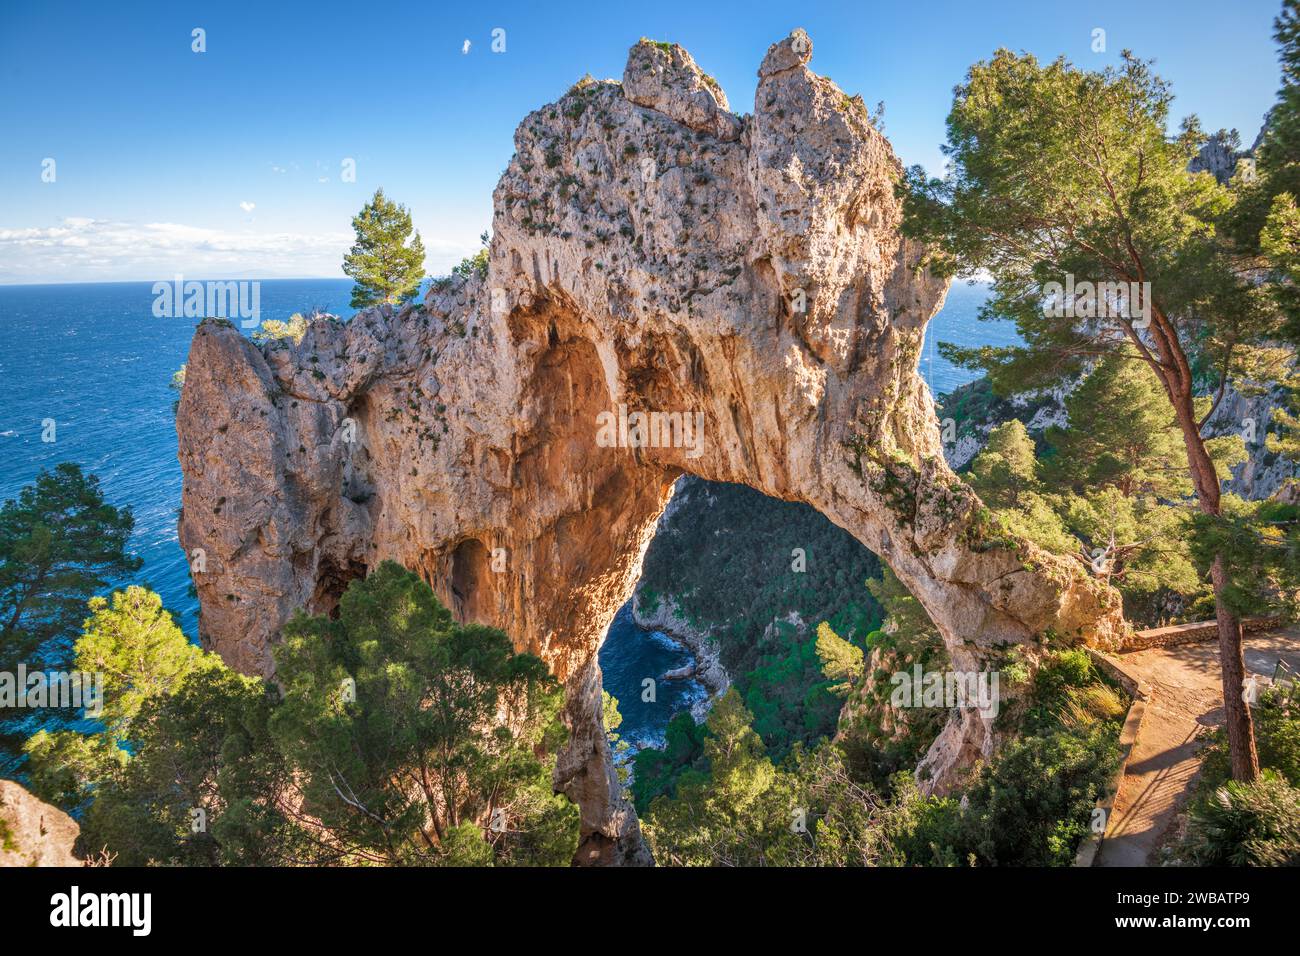 L'Arco Naturale de Capri, Italie. Banque D'Images